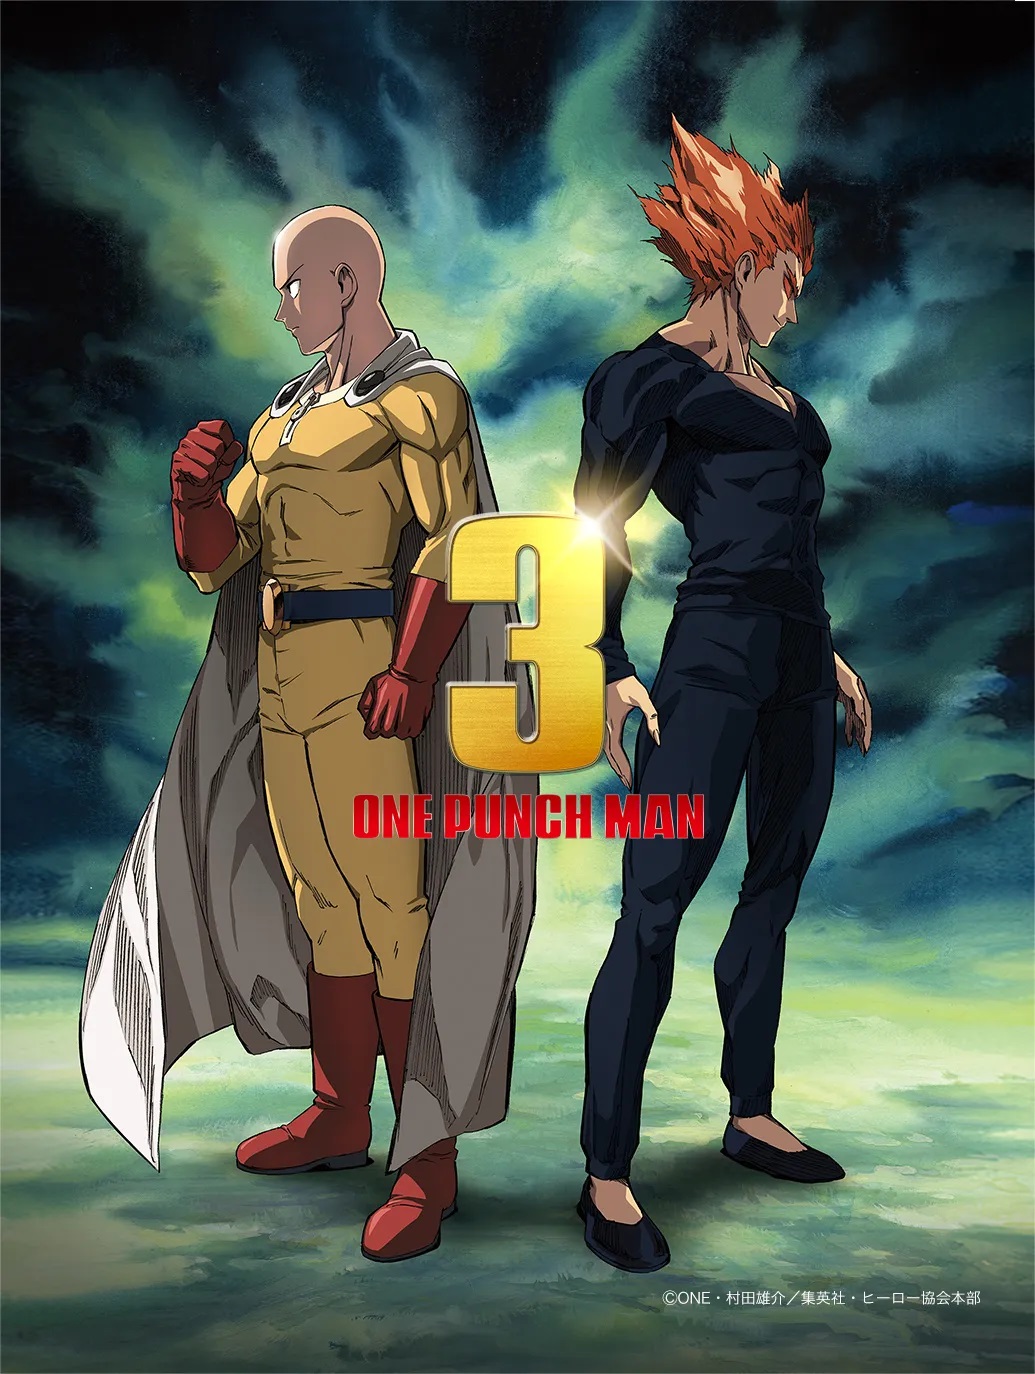 One Punch Man Season 3 Anime Announced